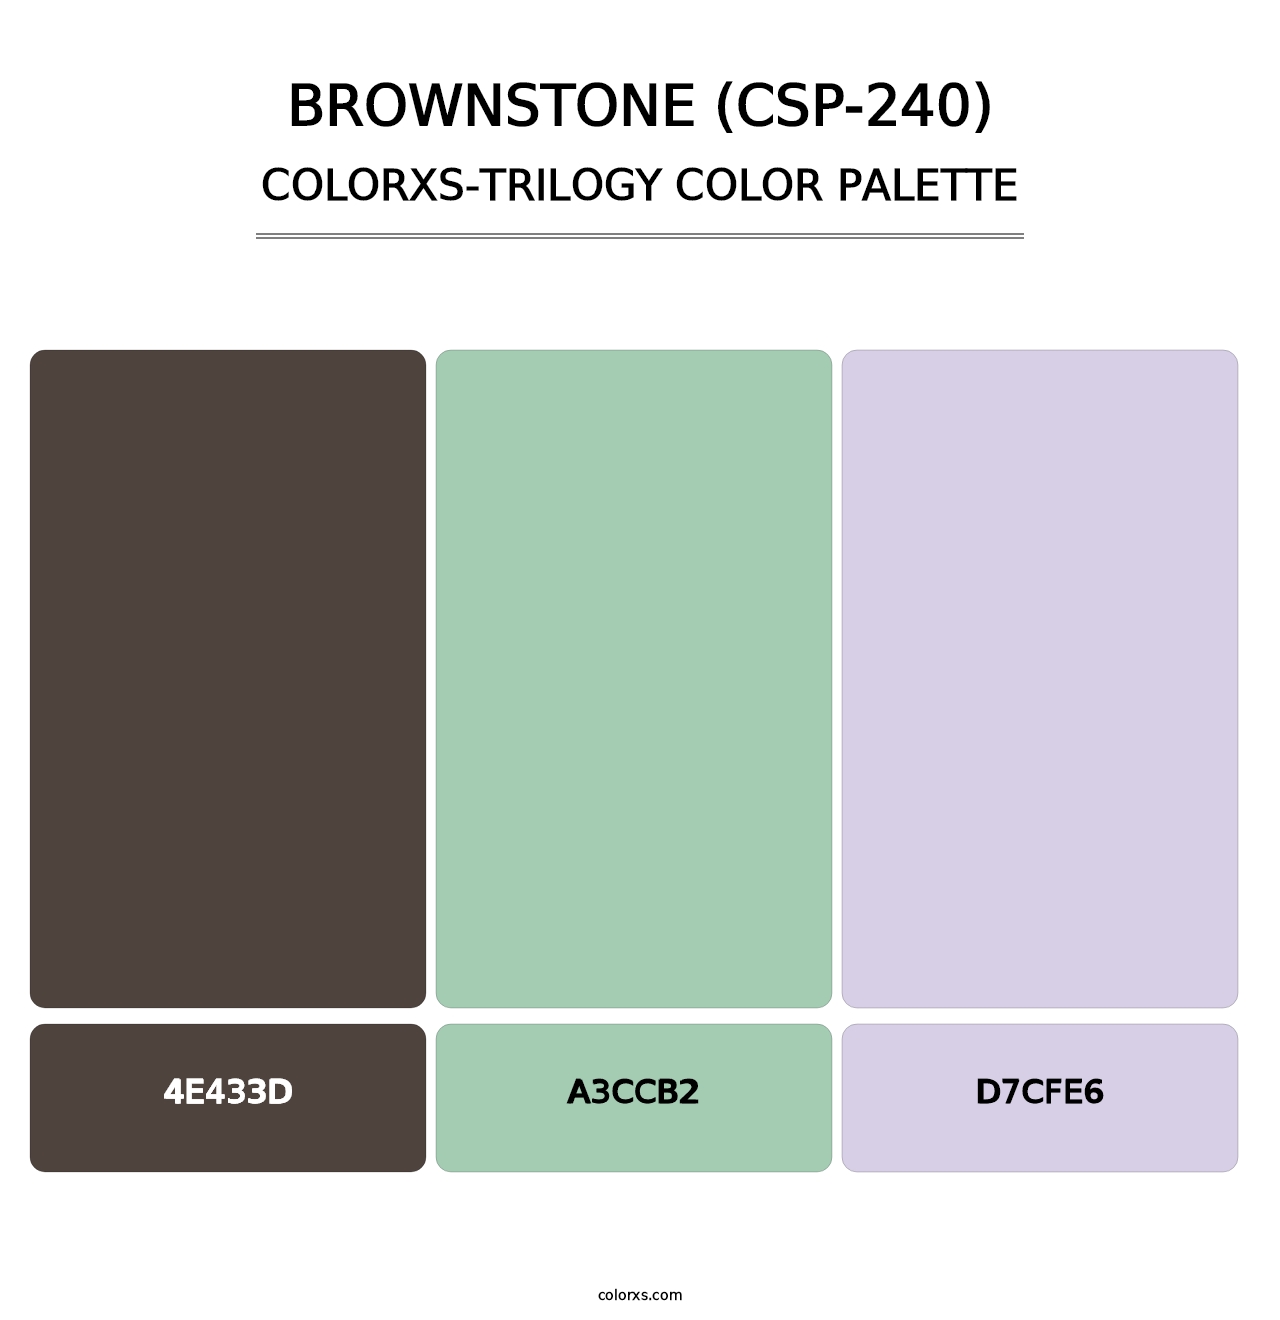 Brownstone (CSP-240) - Colorxs Trilogy Palette